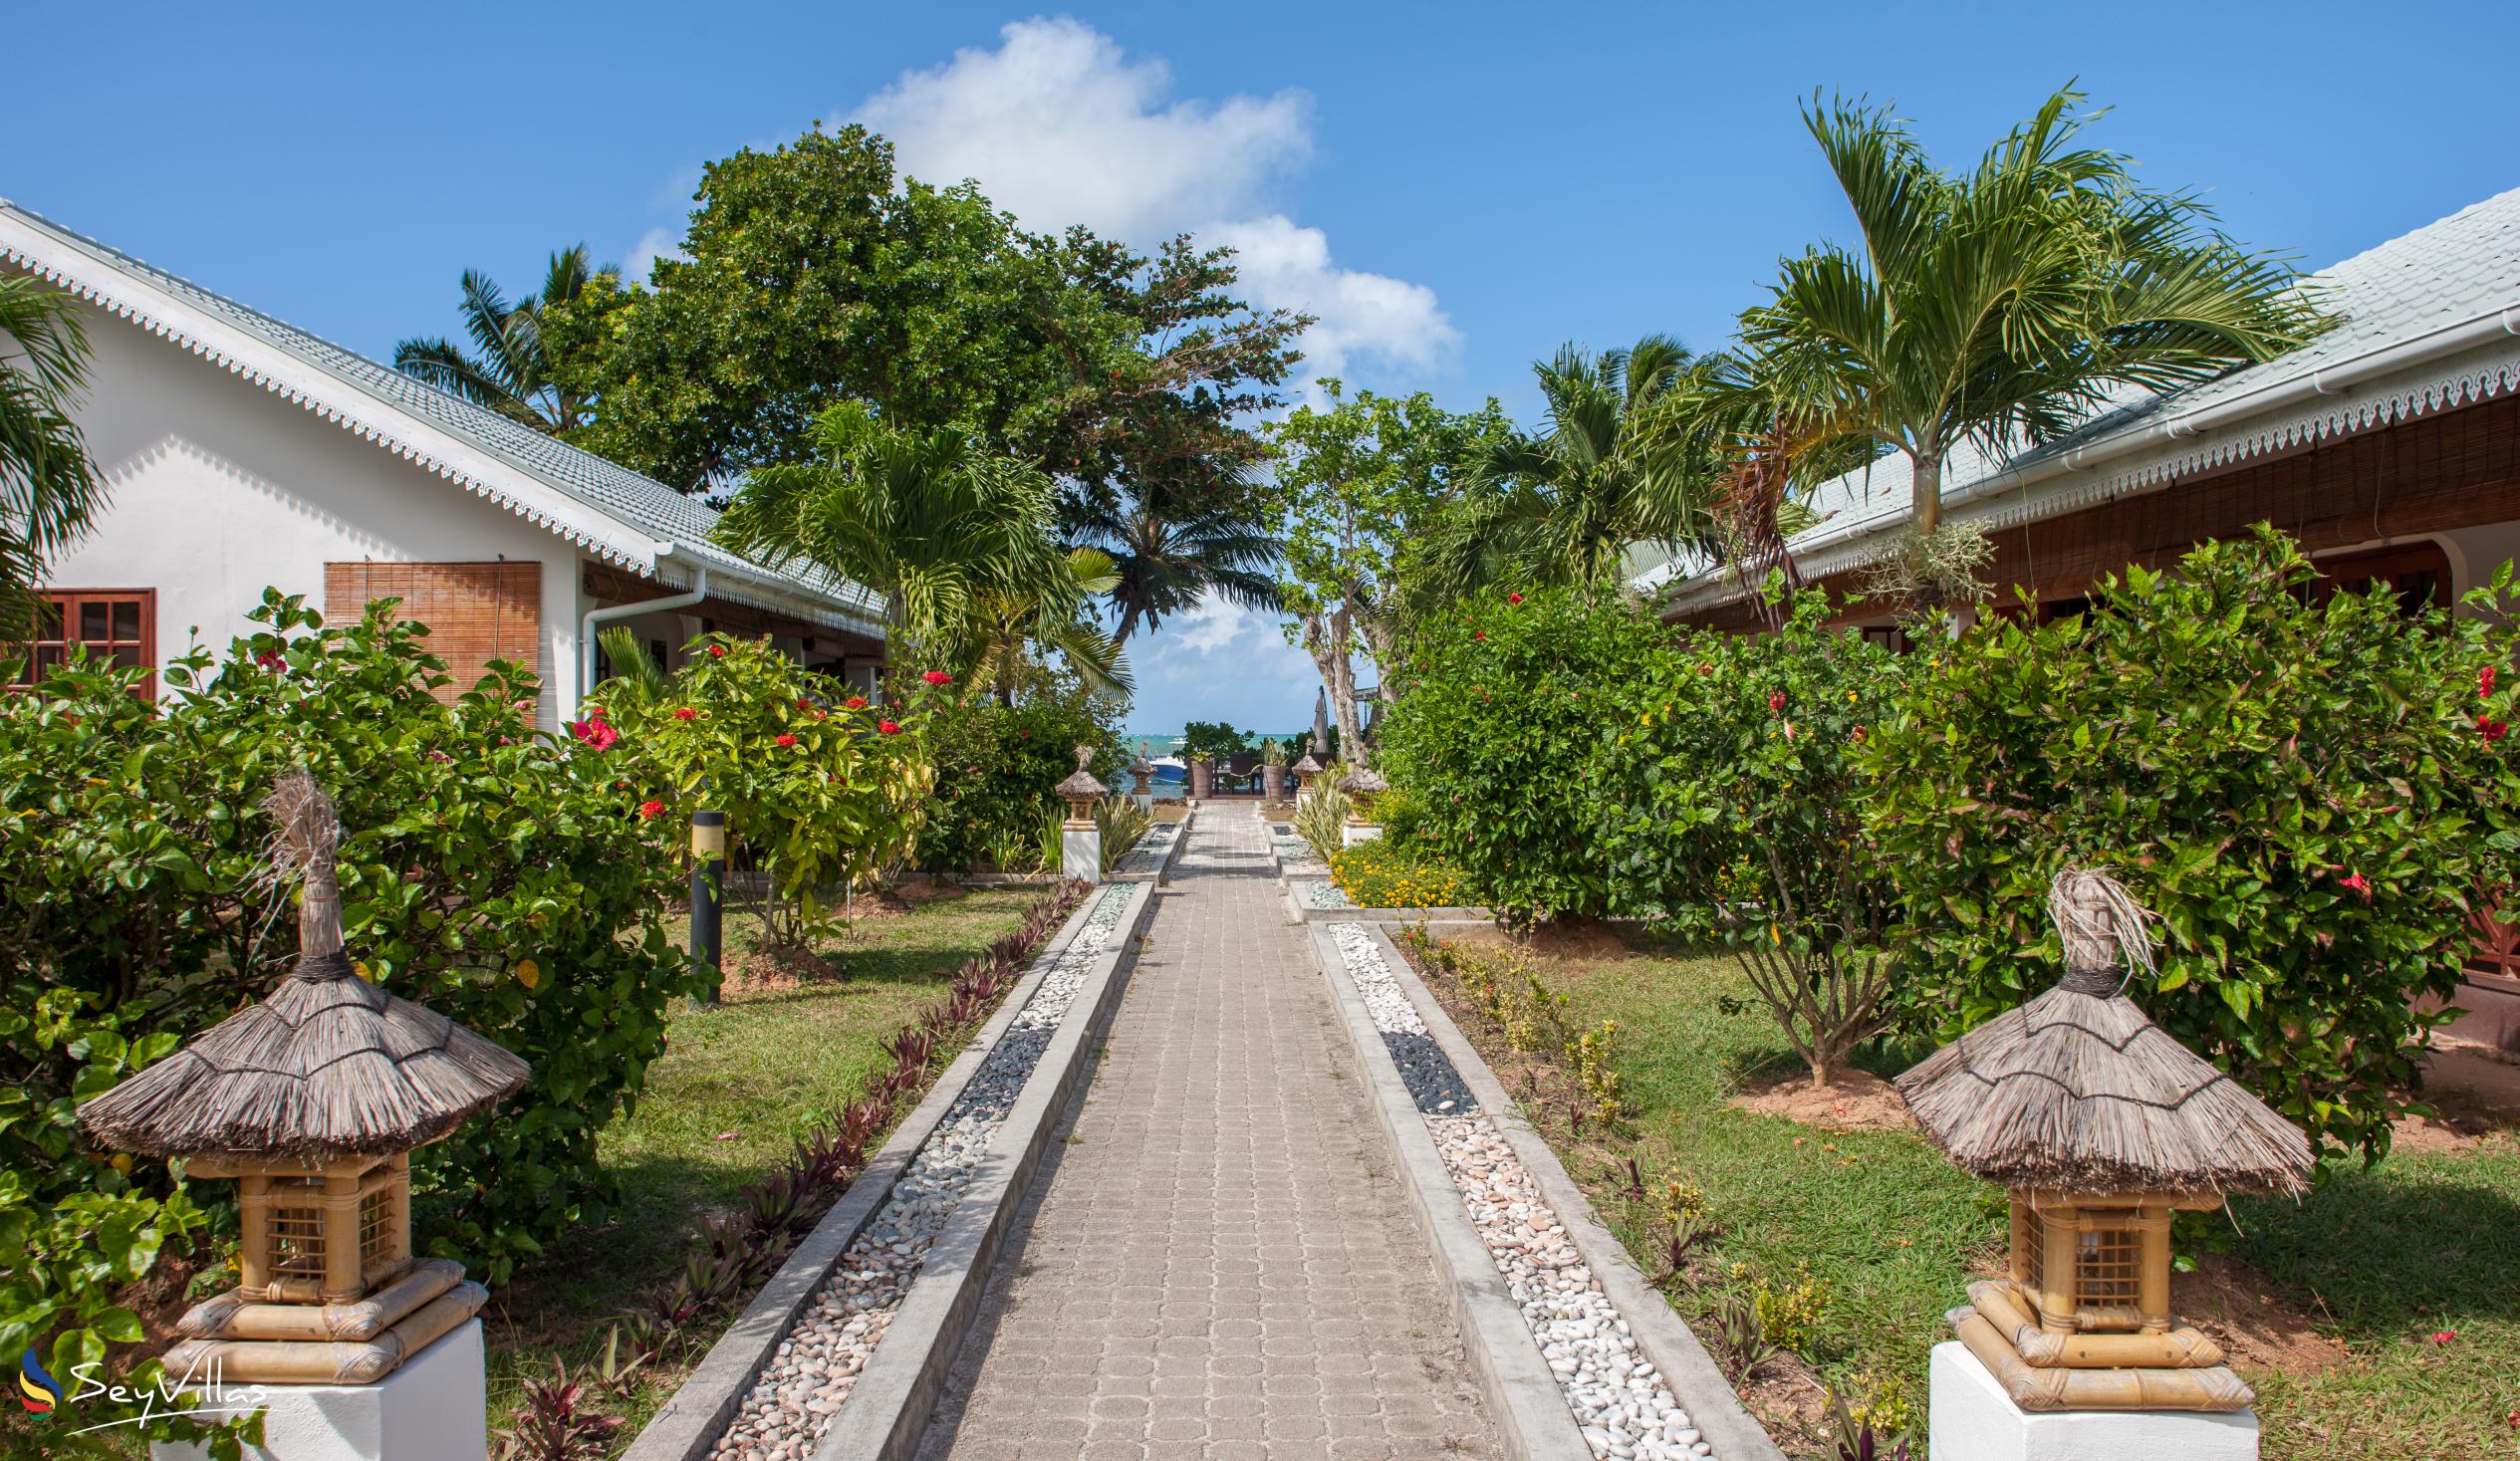 Foto 5: Villas de Mer - Aussenbereich - Praslin (Seychellen)